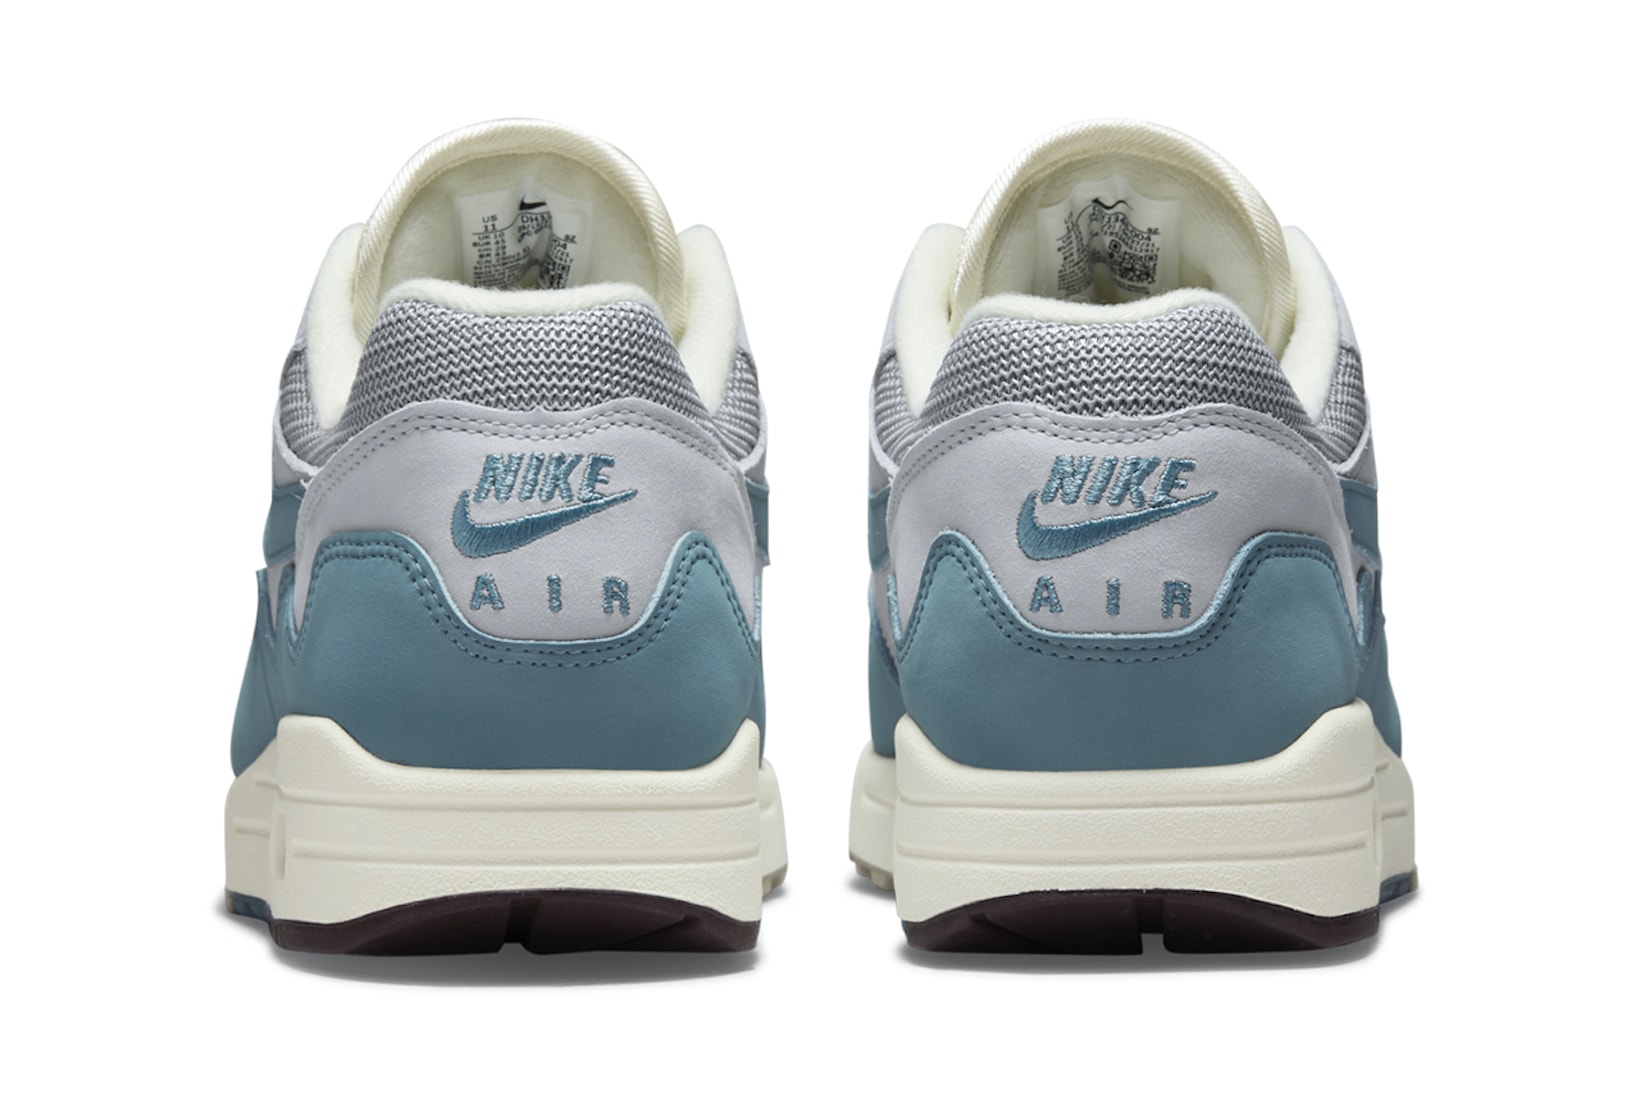 patta nike air max 1 am1 noise aqua blue gray white collaboration sneakers footwear kicks shoes heels